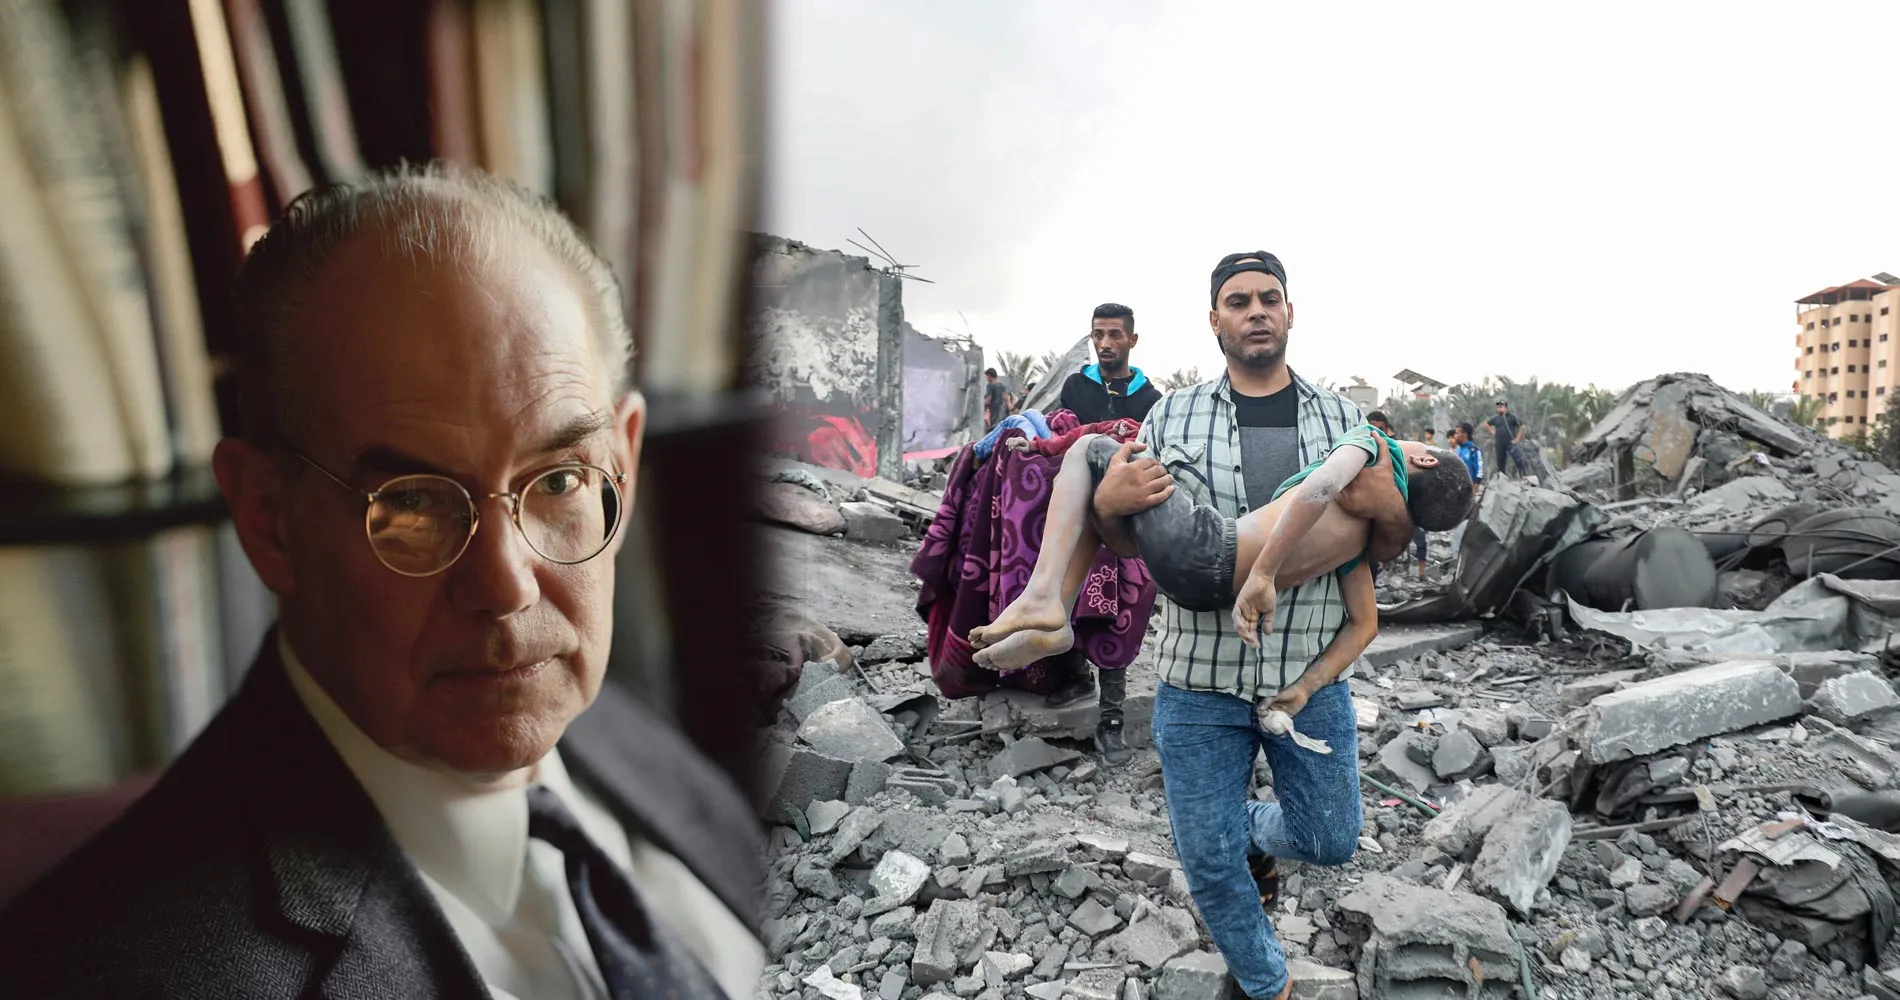 Professor John Mearsheimer on Genocide in Gaza